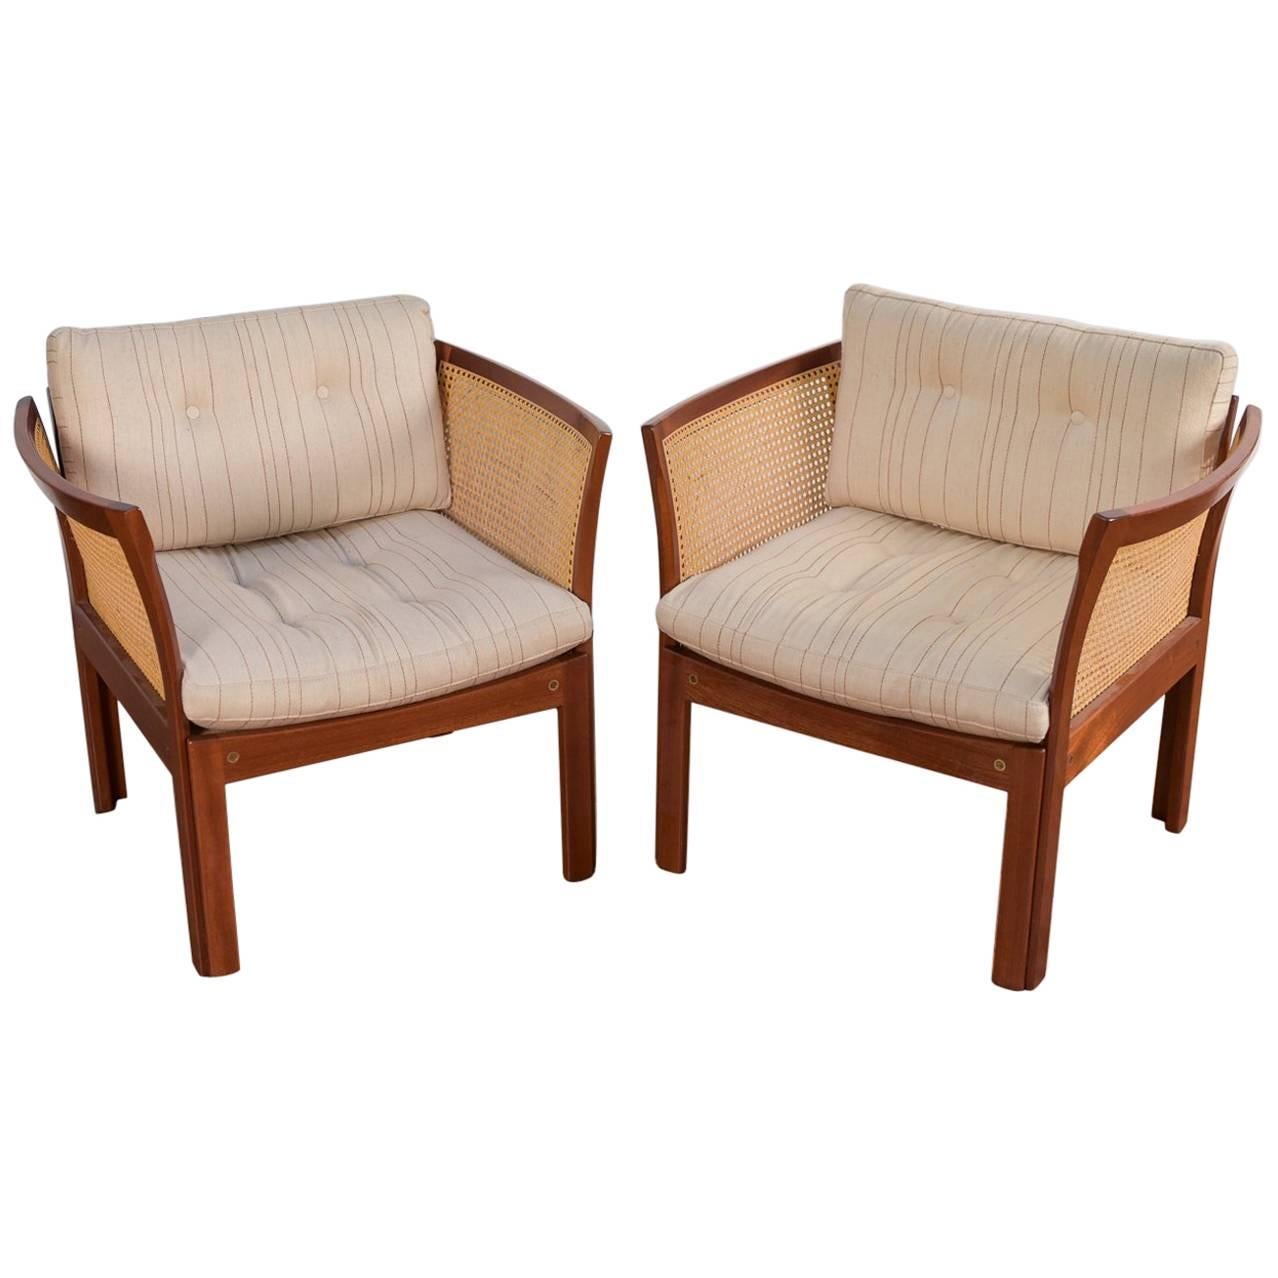 Pair of Plexus Easy Chairs in Mahogany by Illum Wikkelsø for C. F. Christensen